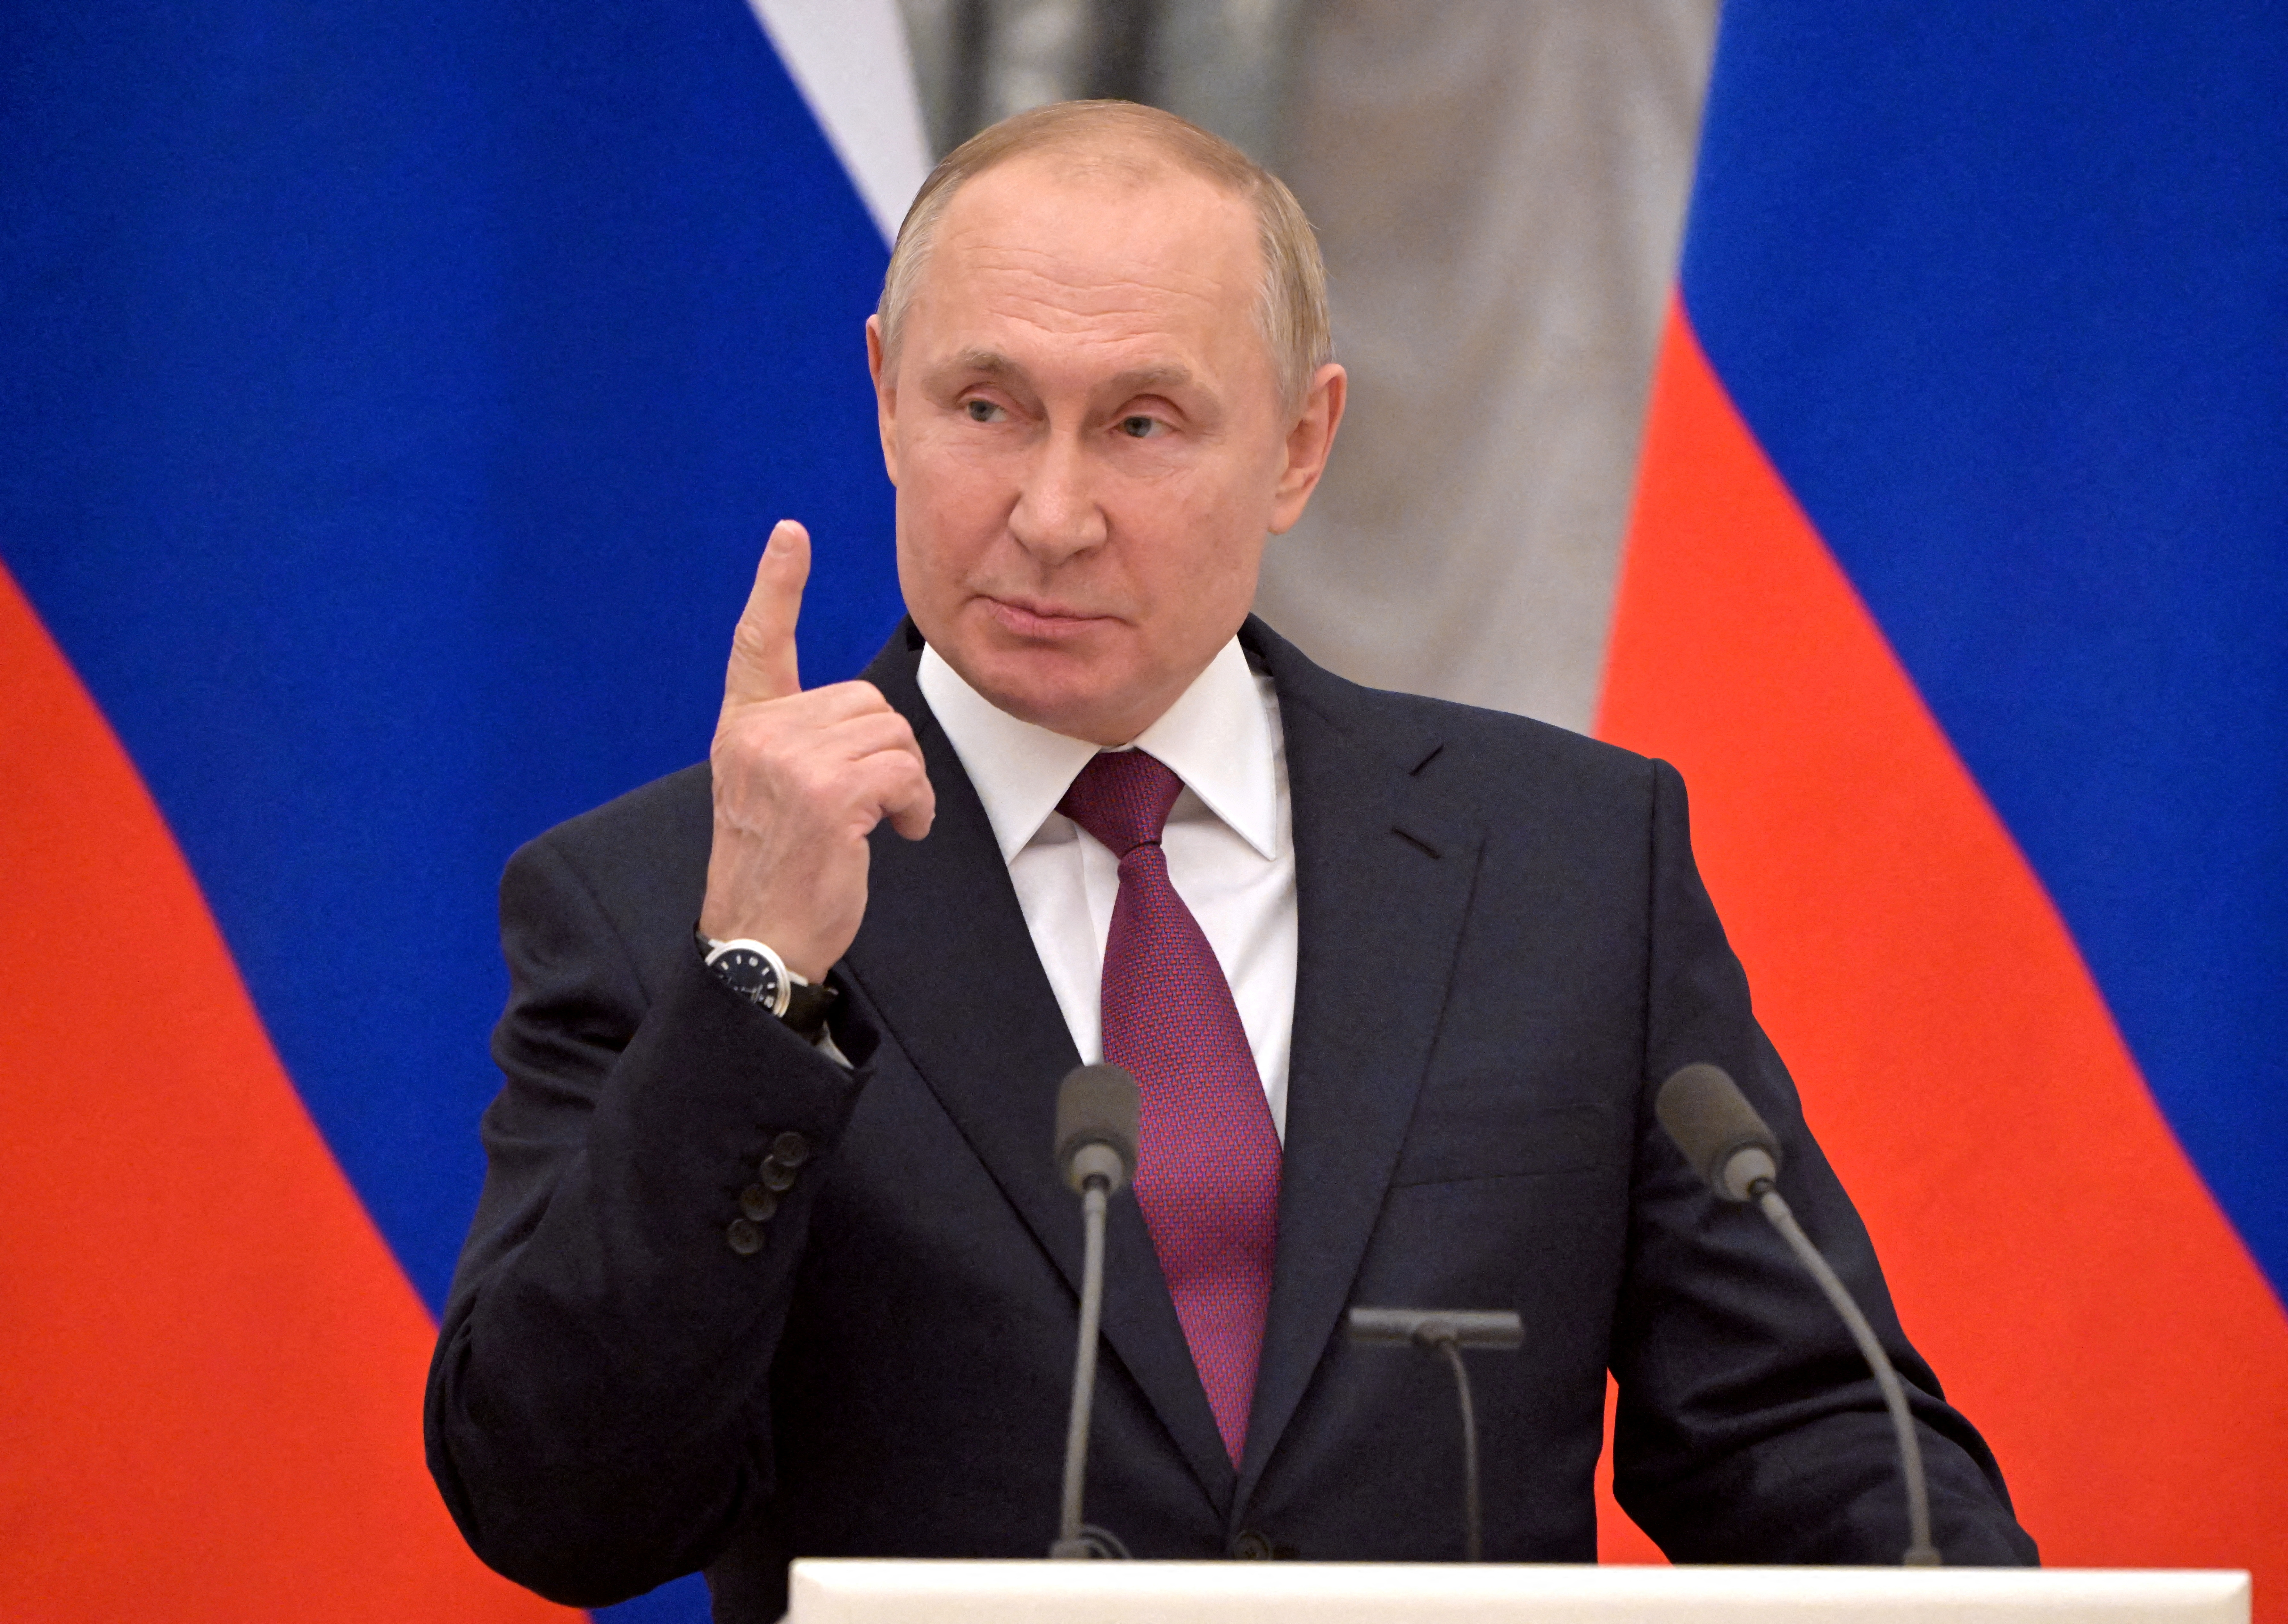 Analysis: Putin makes inroads in pressure campaign against West, Ukraine | Reuters